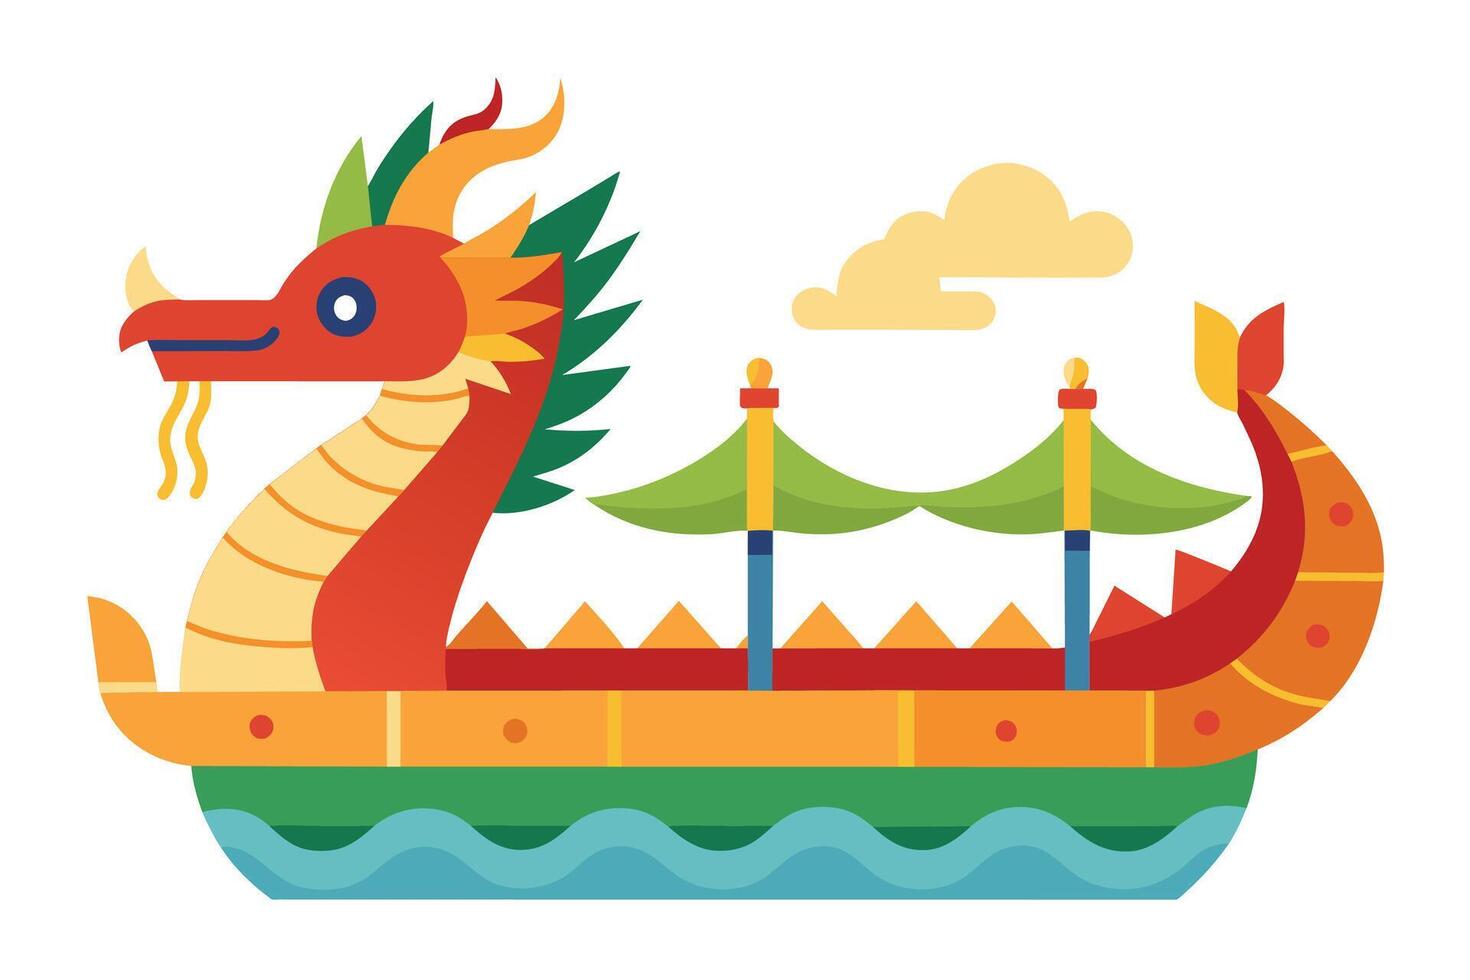 Dragon Boat Festival vector